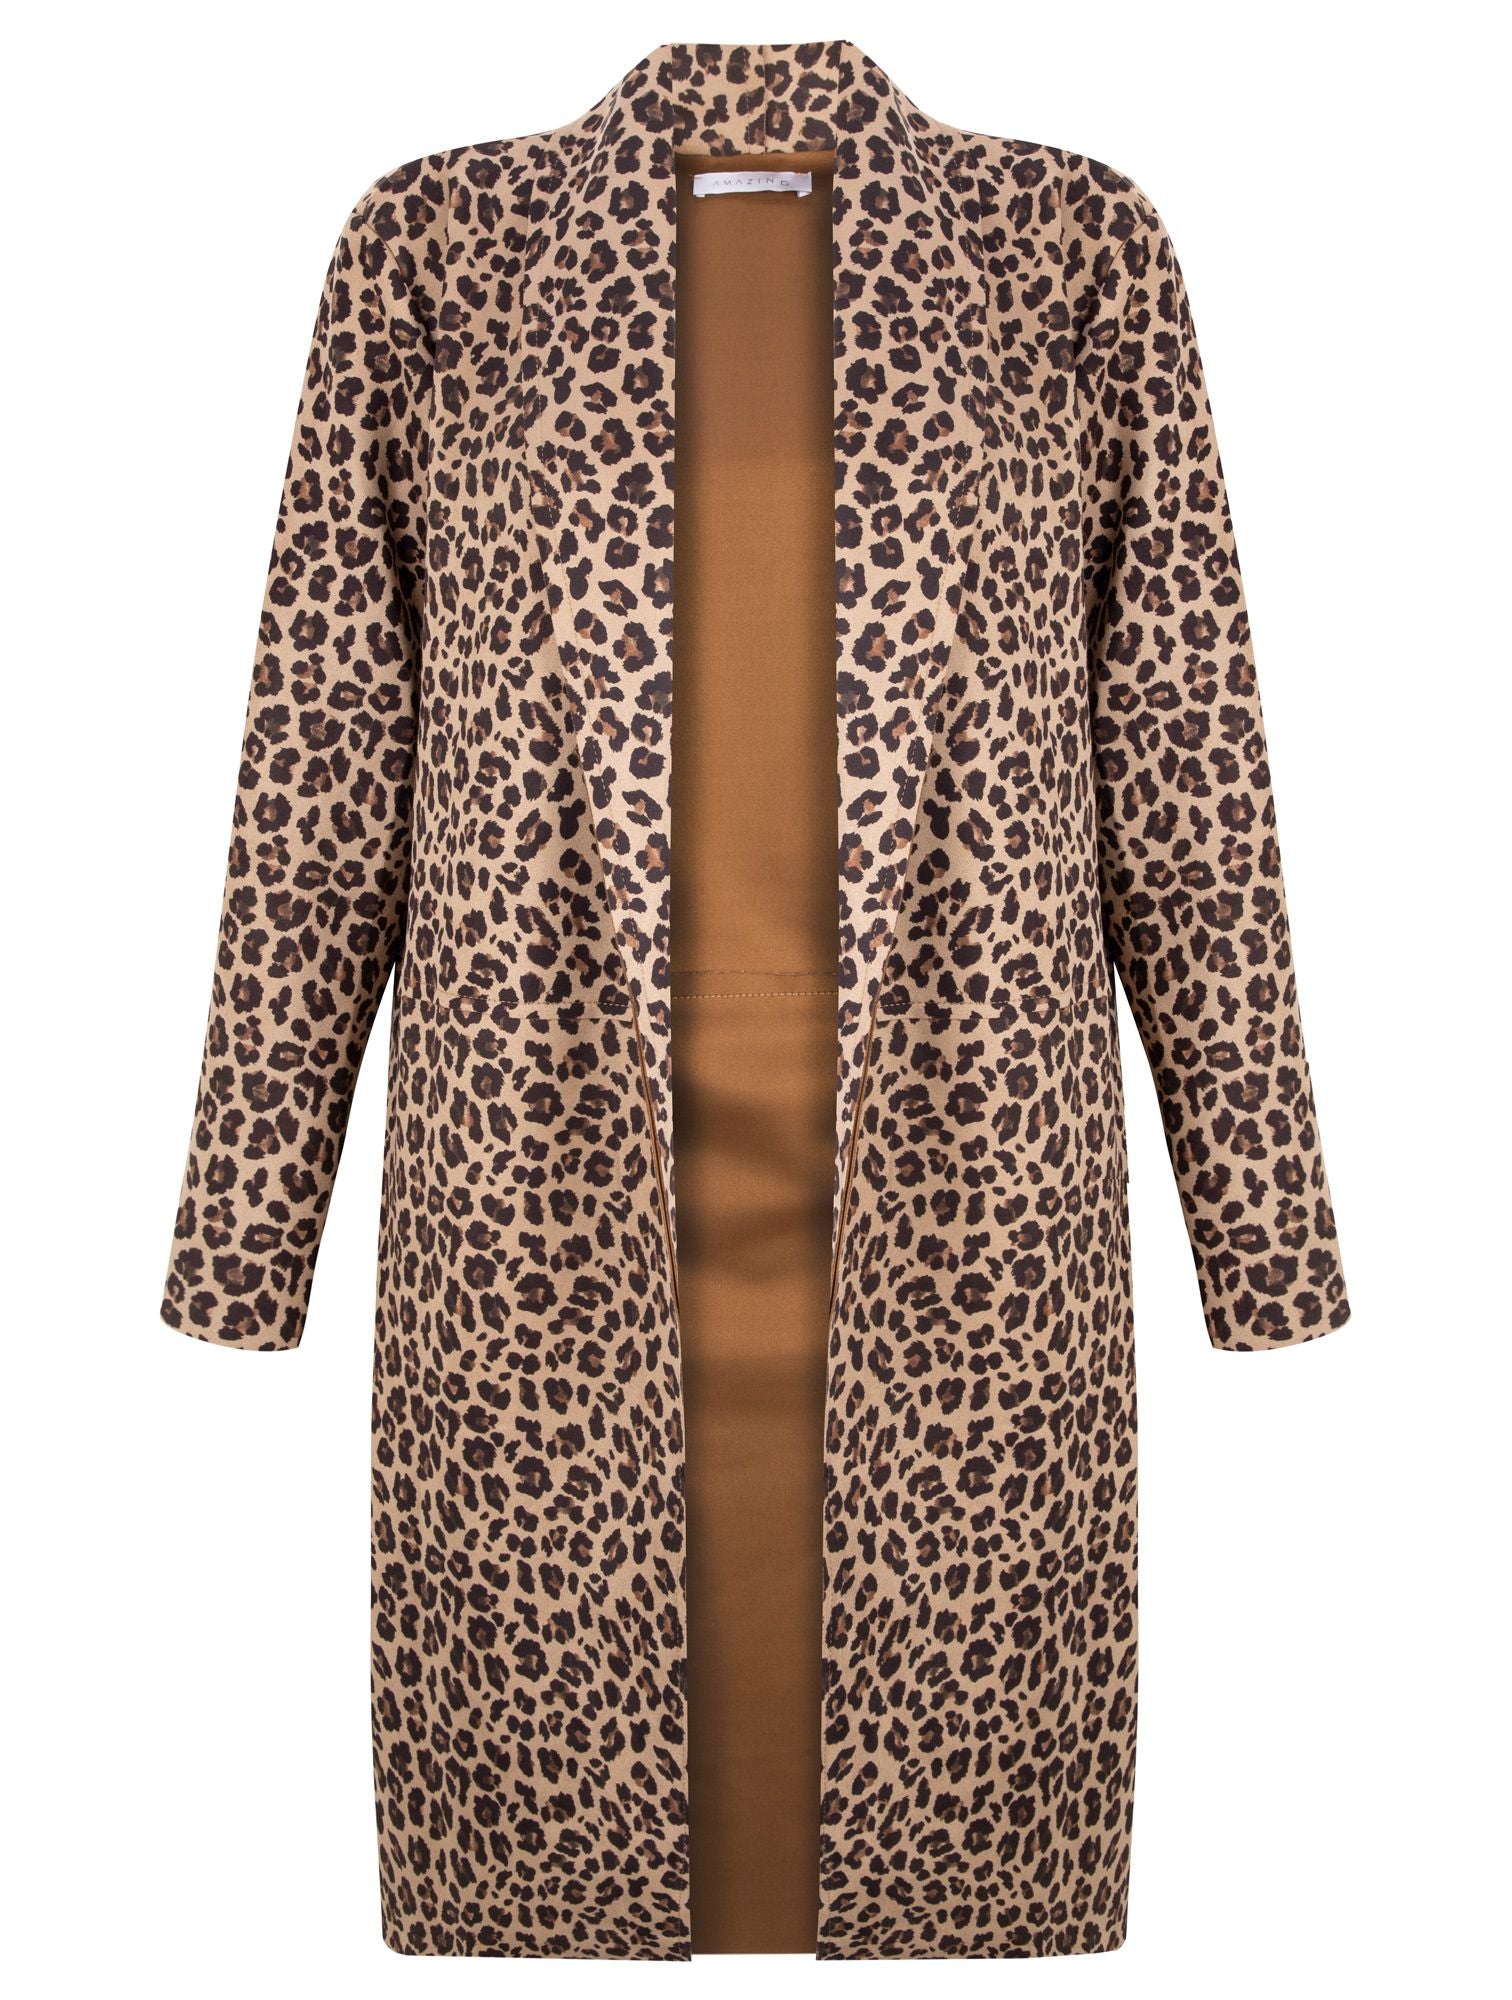 Faux Suede stretch Duster Coat leopard - Maya Maya Ltd